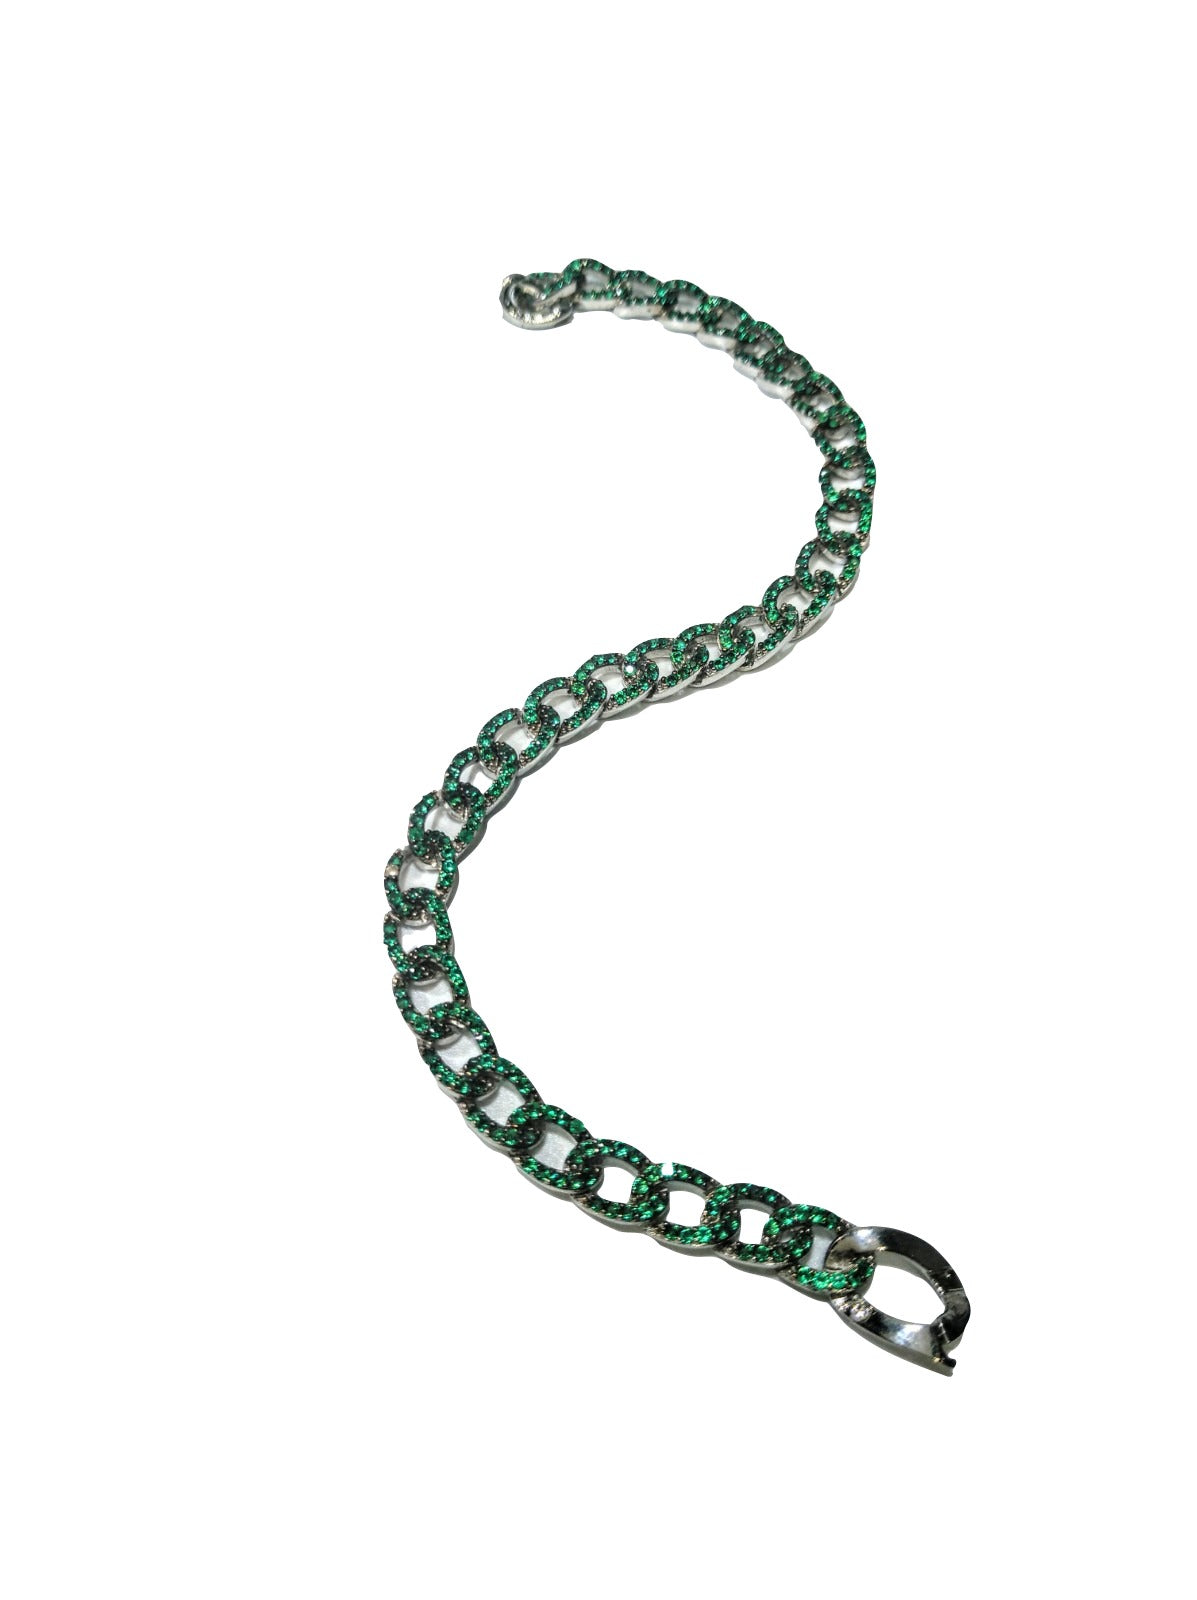 Silver Groumette Chain Bracelet